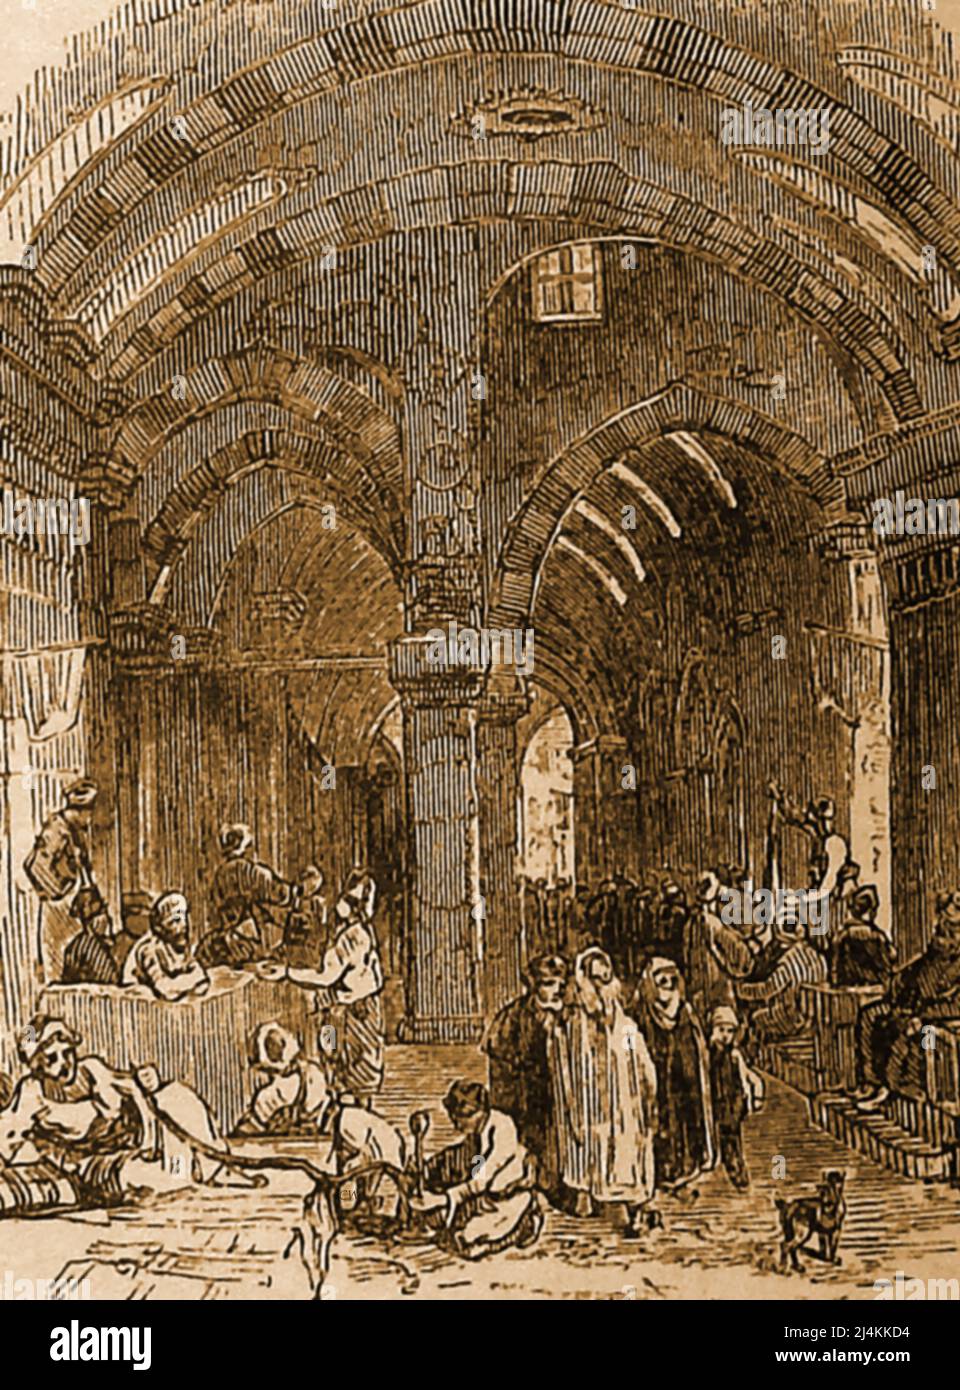 A 19th century engraving showing the Great Bazaar Constantinople (Istanbul) as it was at the time. Today the Grand Bazaar is still operating and employs around 26,000 people and attracts up to 400,000 visitors daily -----------------------Konstantinopolis'teki Büyük Çarşı'yı gösteren 19. yüzyıldan kalma bir gravür (İstanbul). Stock Photo